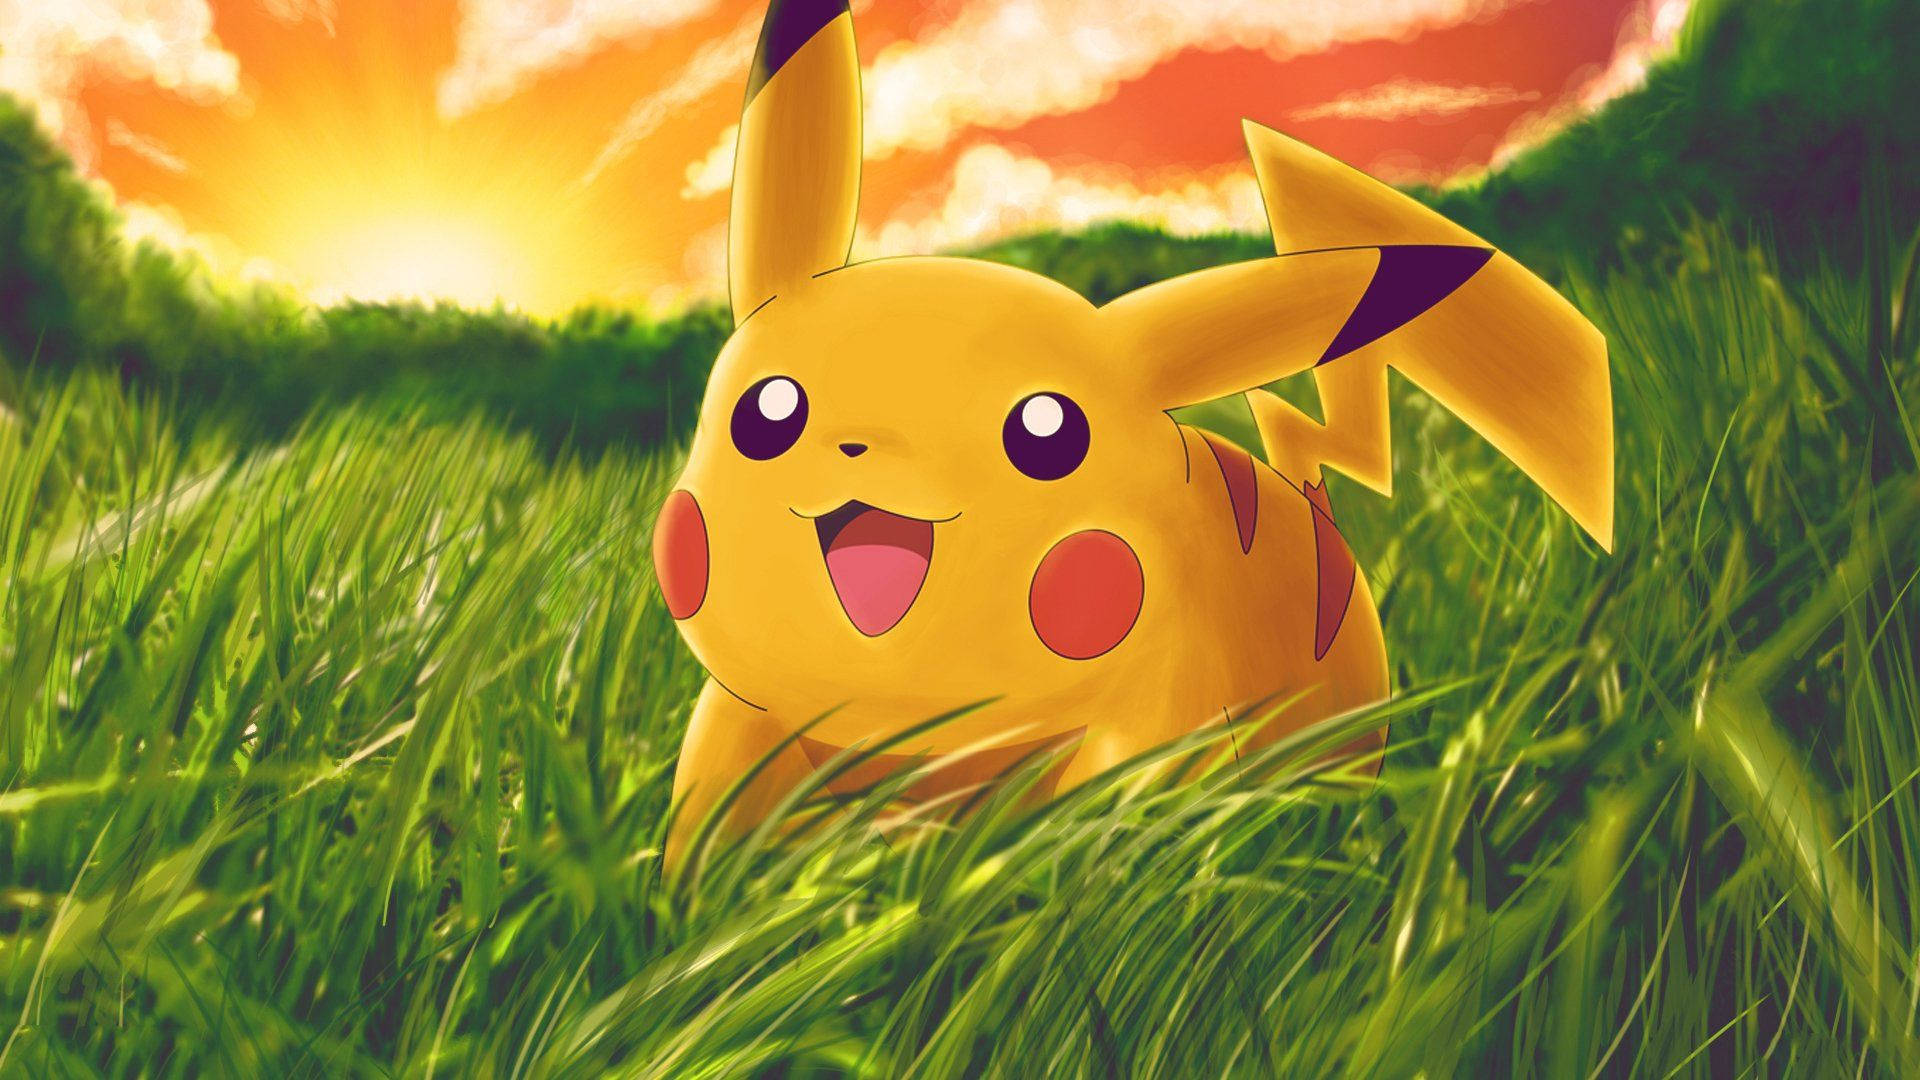 Top 999+ Pikachu Wallpaper Full HD, 4K✓Free to Use